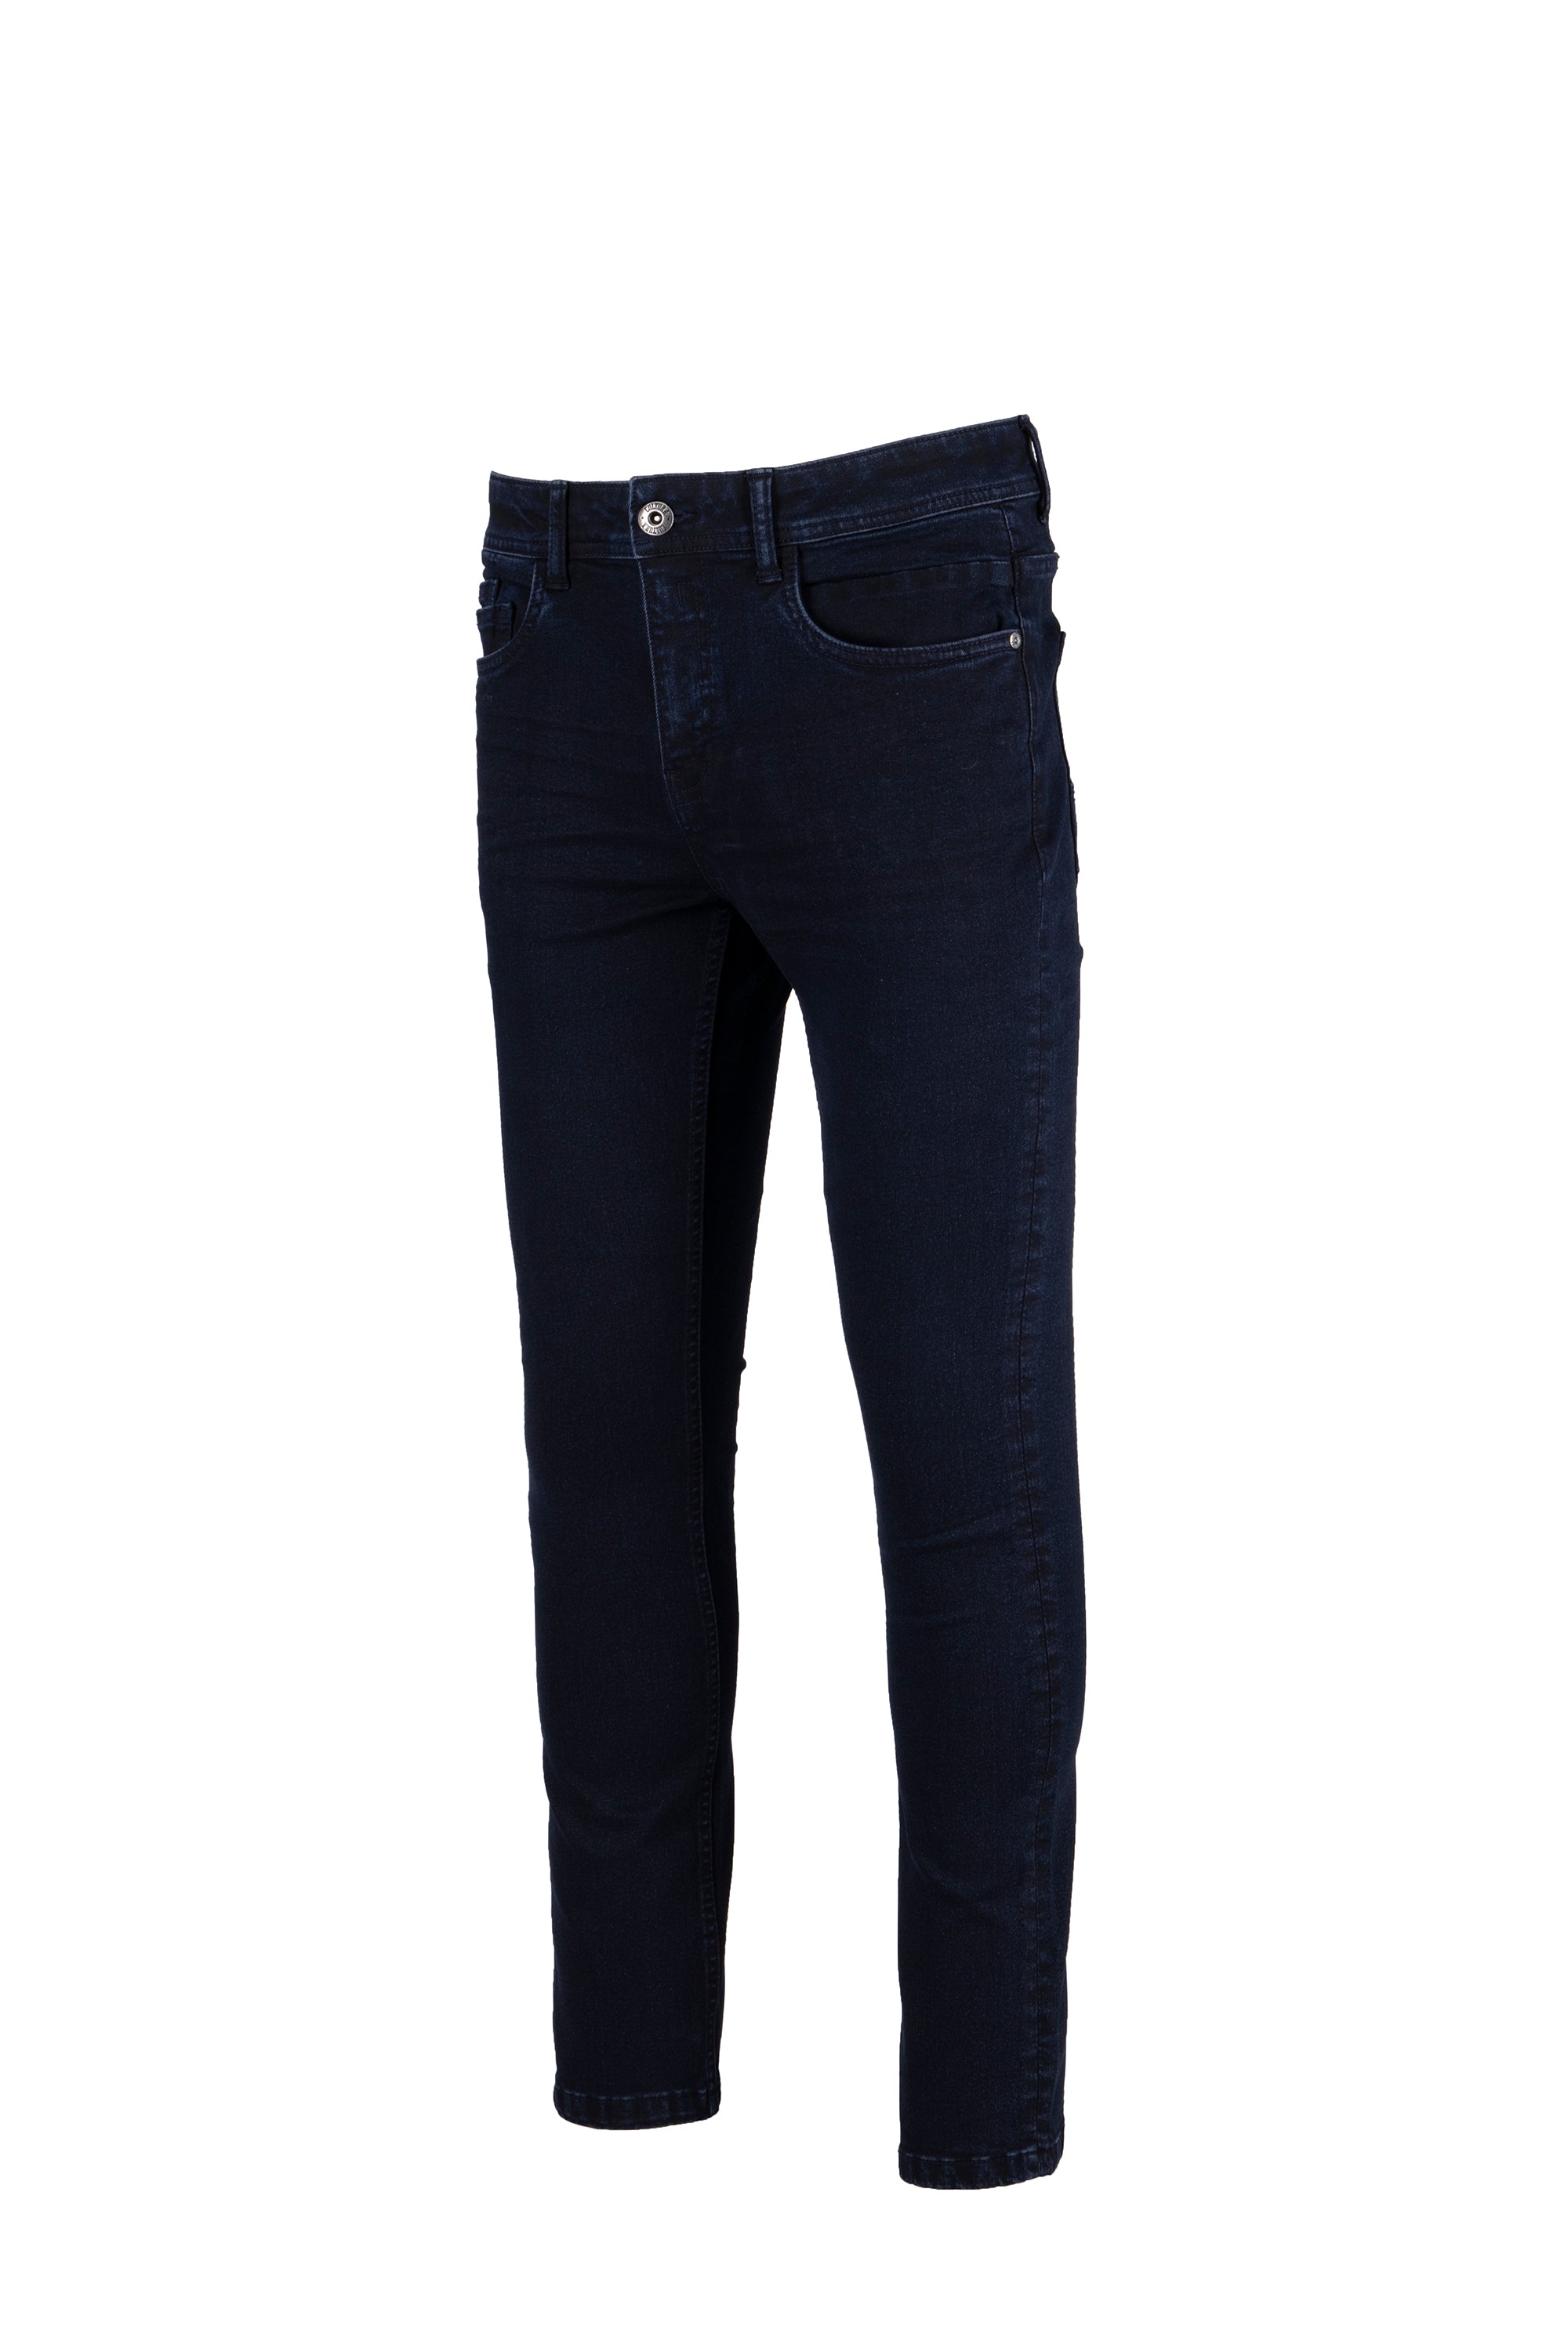 Traders Regular Fit Stretch Jeans Blue Black - Lowes Menswear